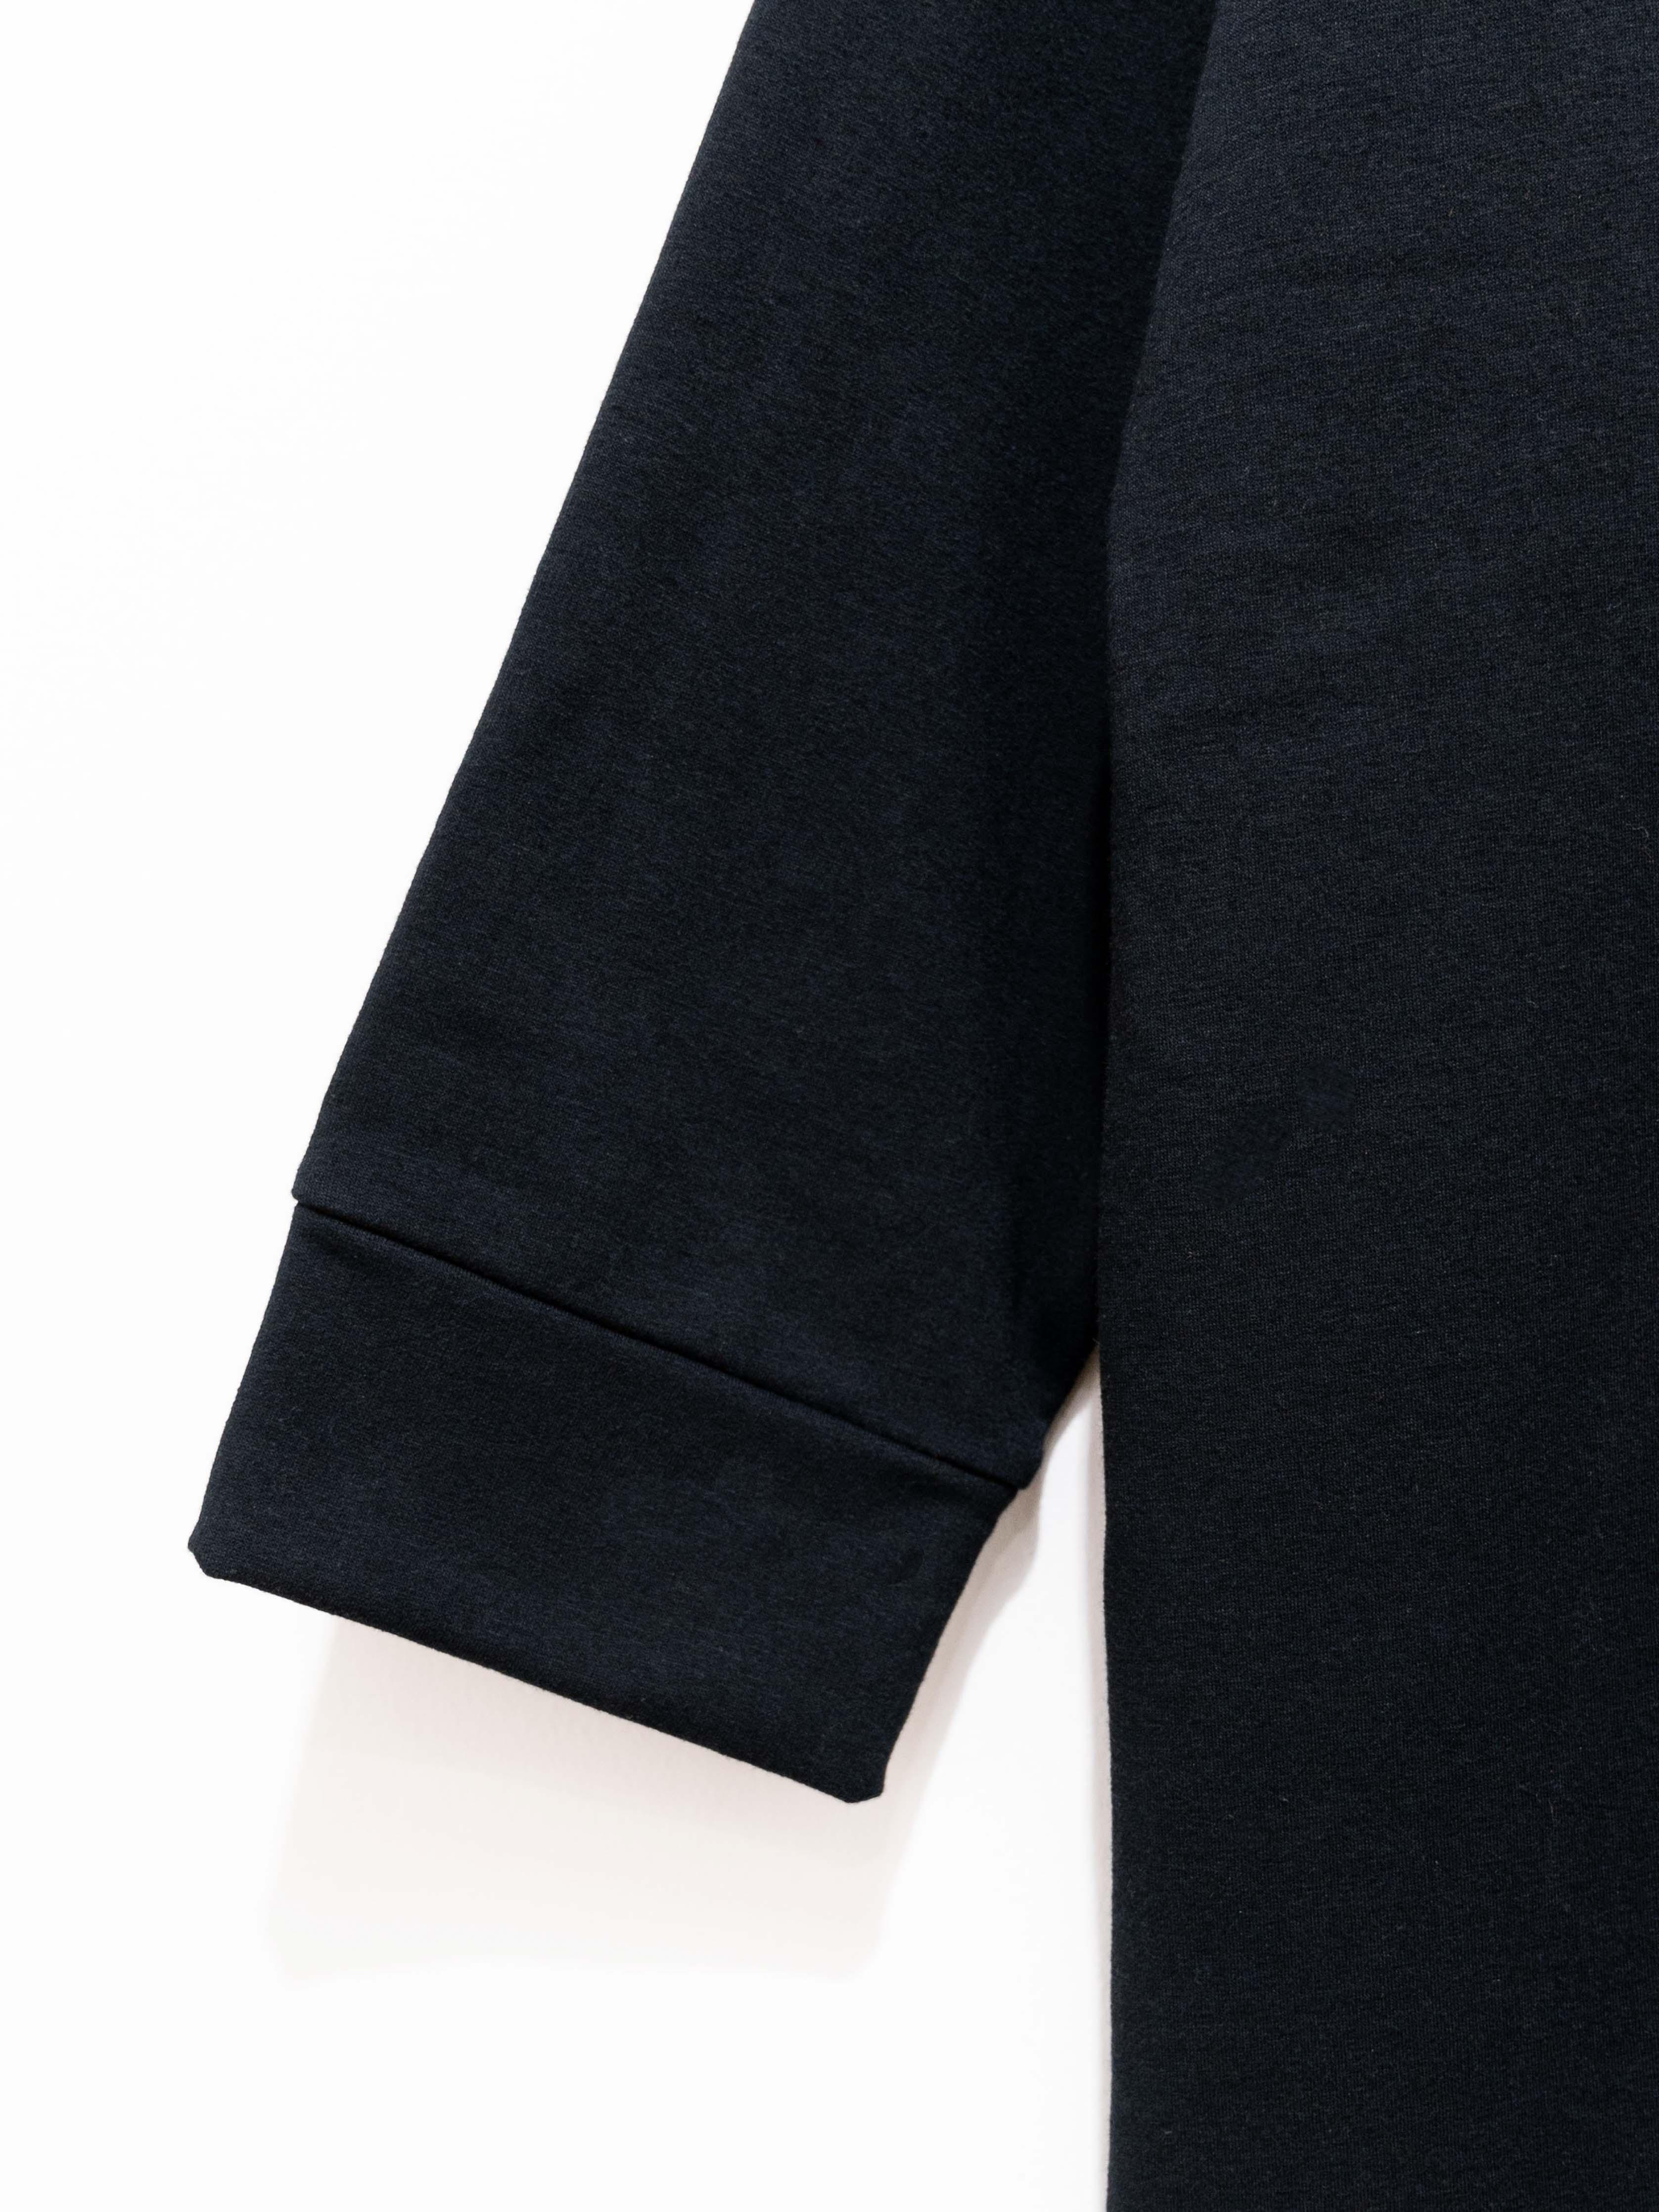 Namu Shop - Ichi Antiquites Sweatshirt Dress - Black